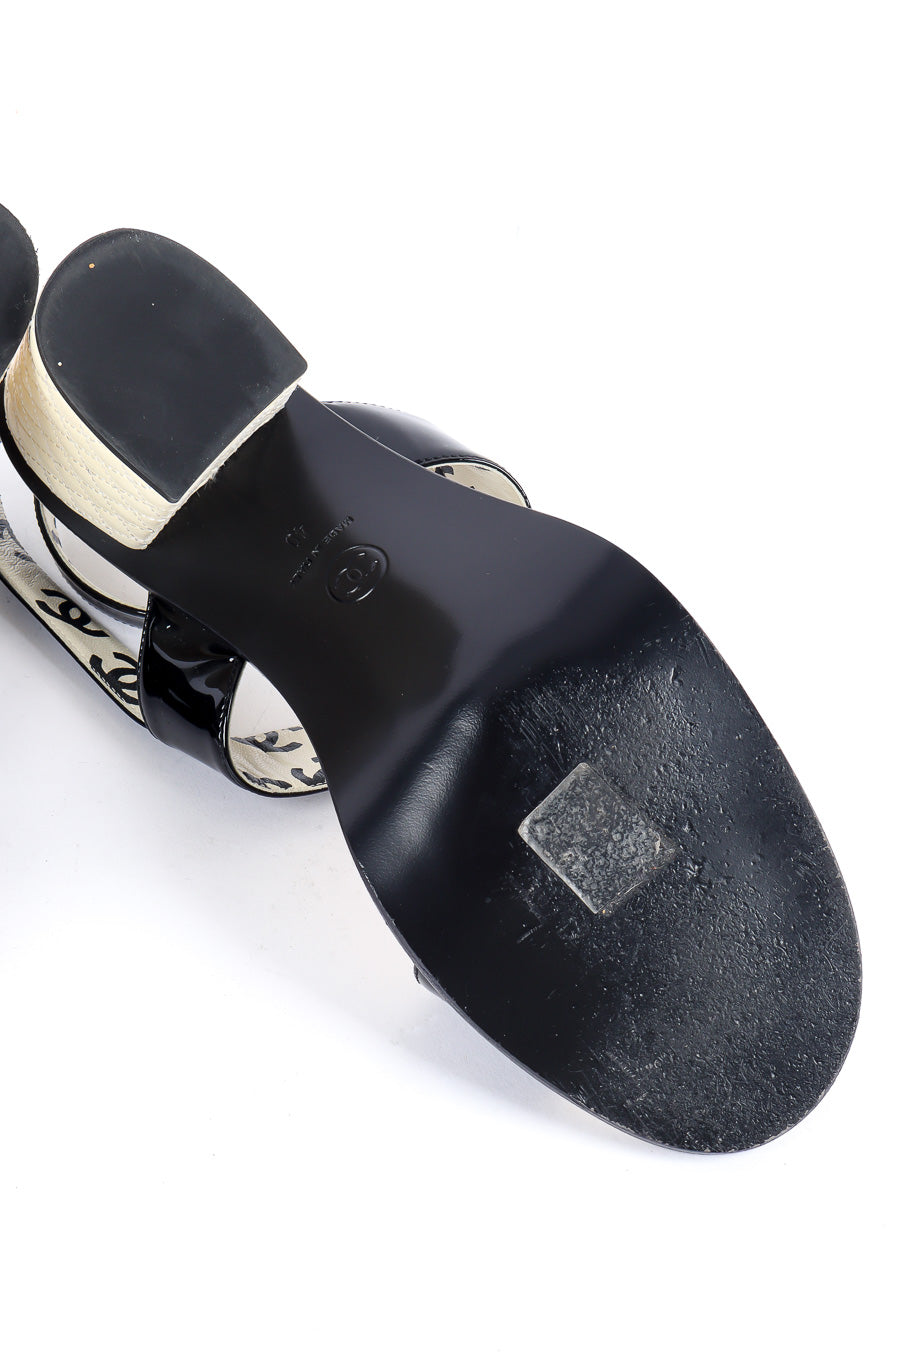 Chanel patent leather wrap sandal scuffs at sole @recessla